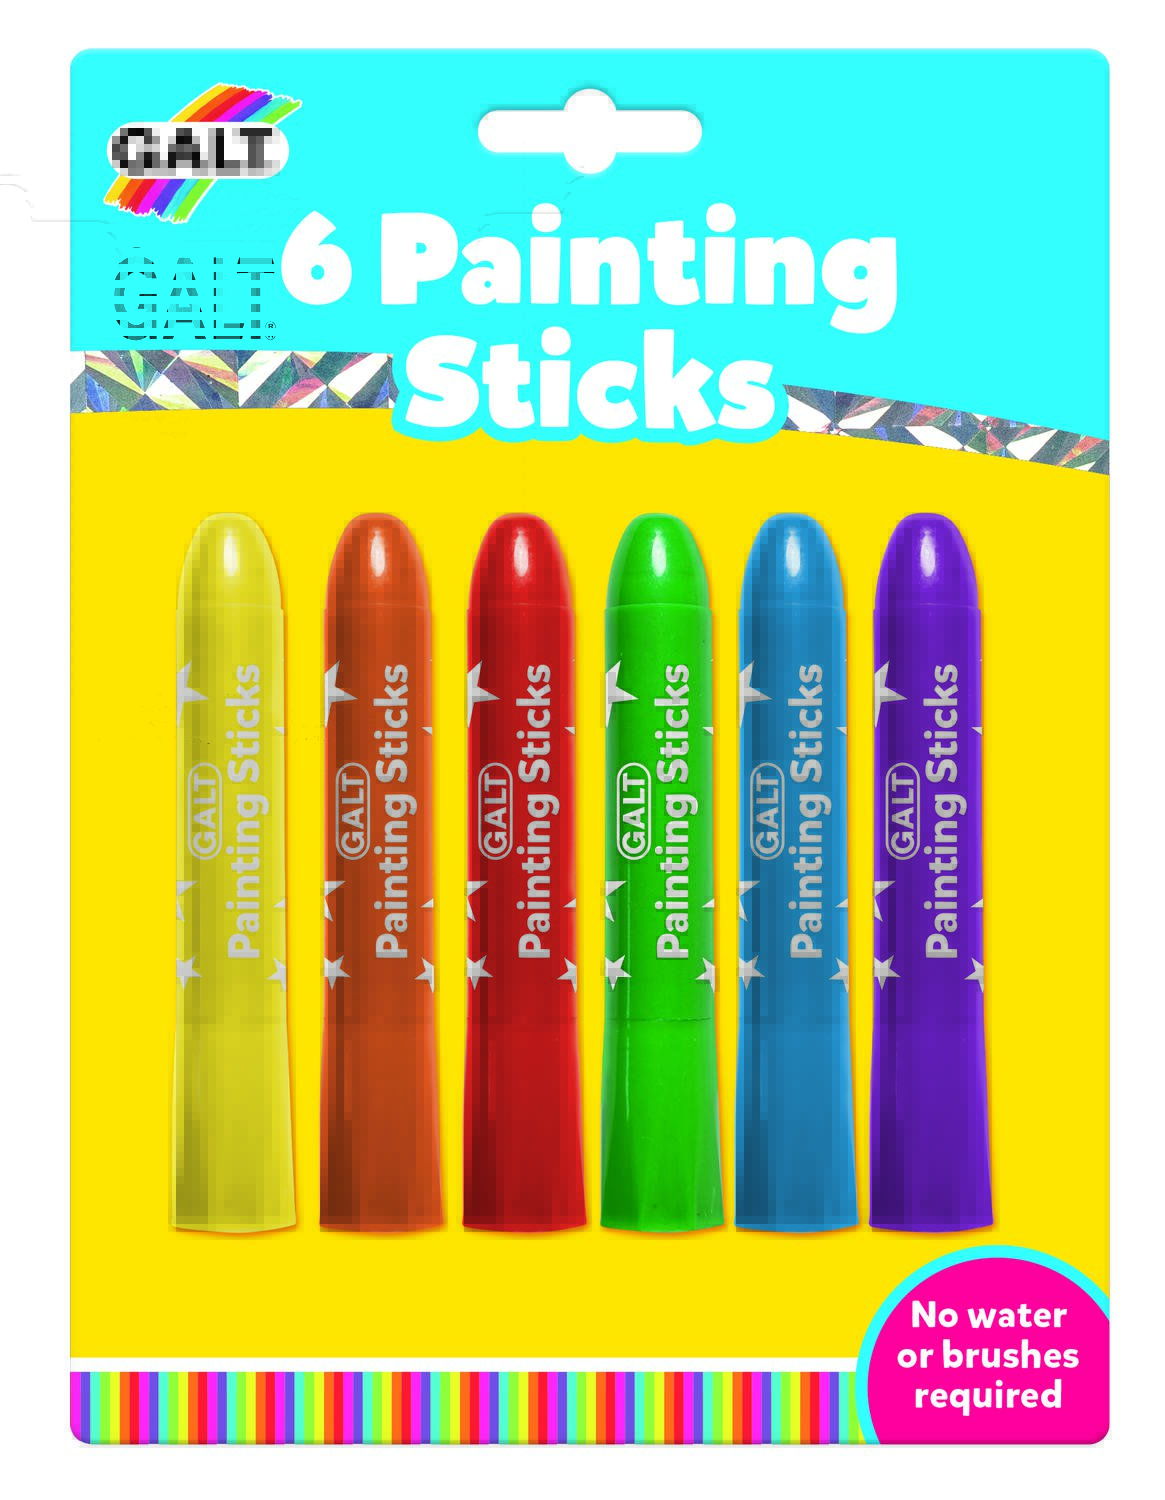 Magic Painting Sticks